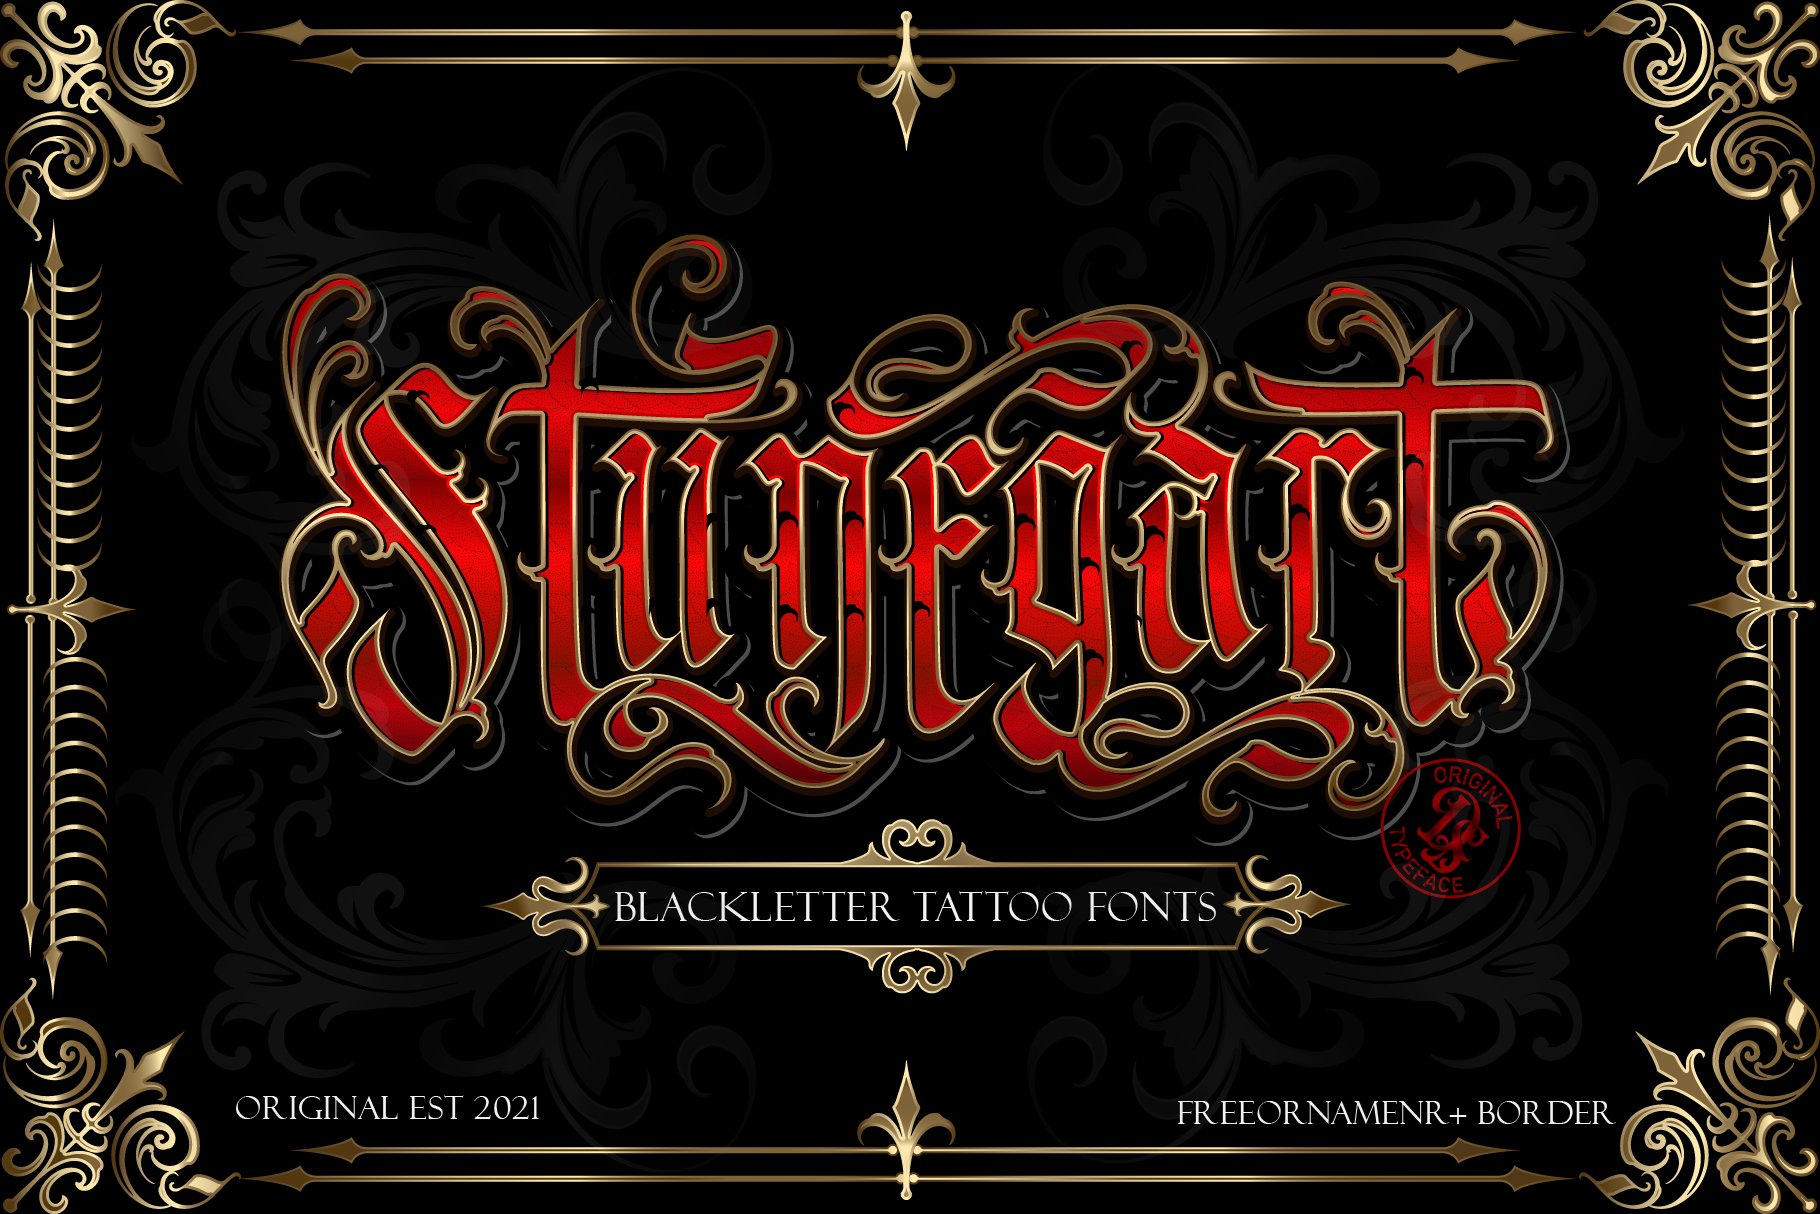 Stunegart FONT + Decorative cover image.